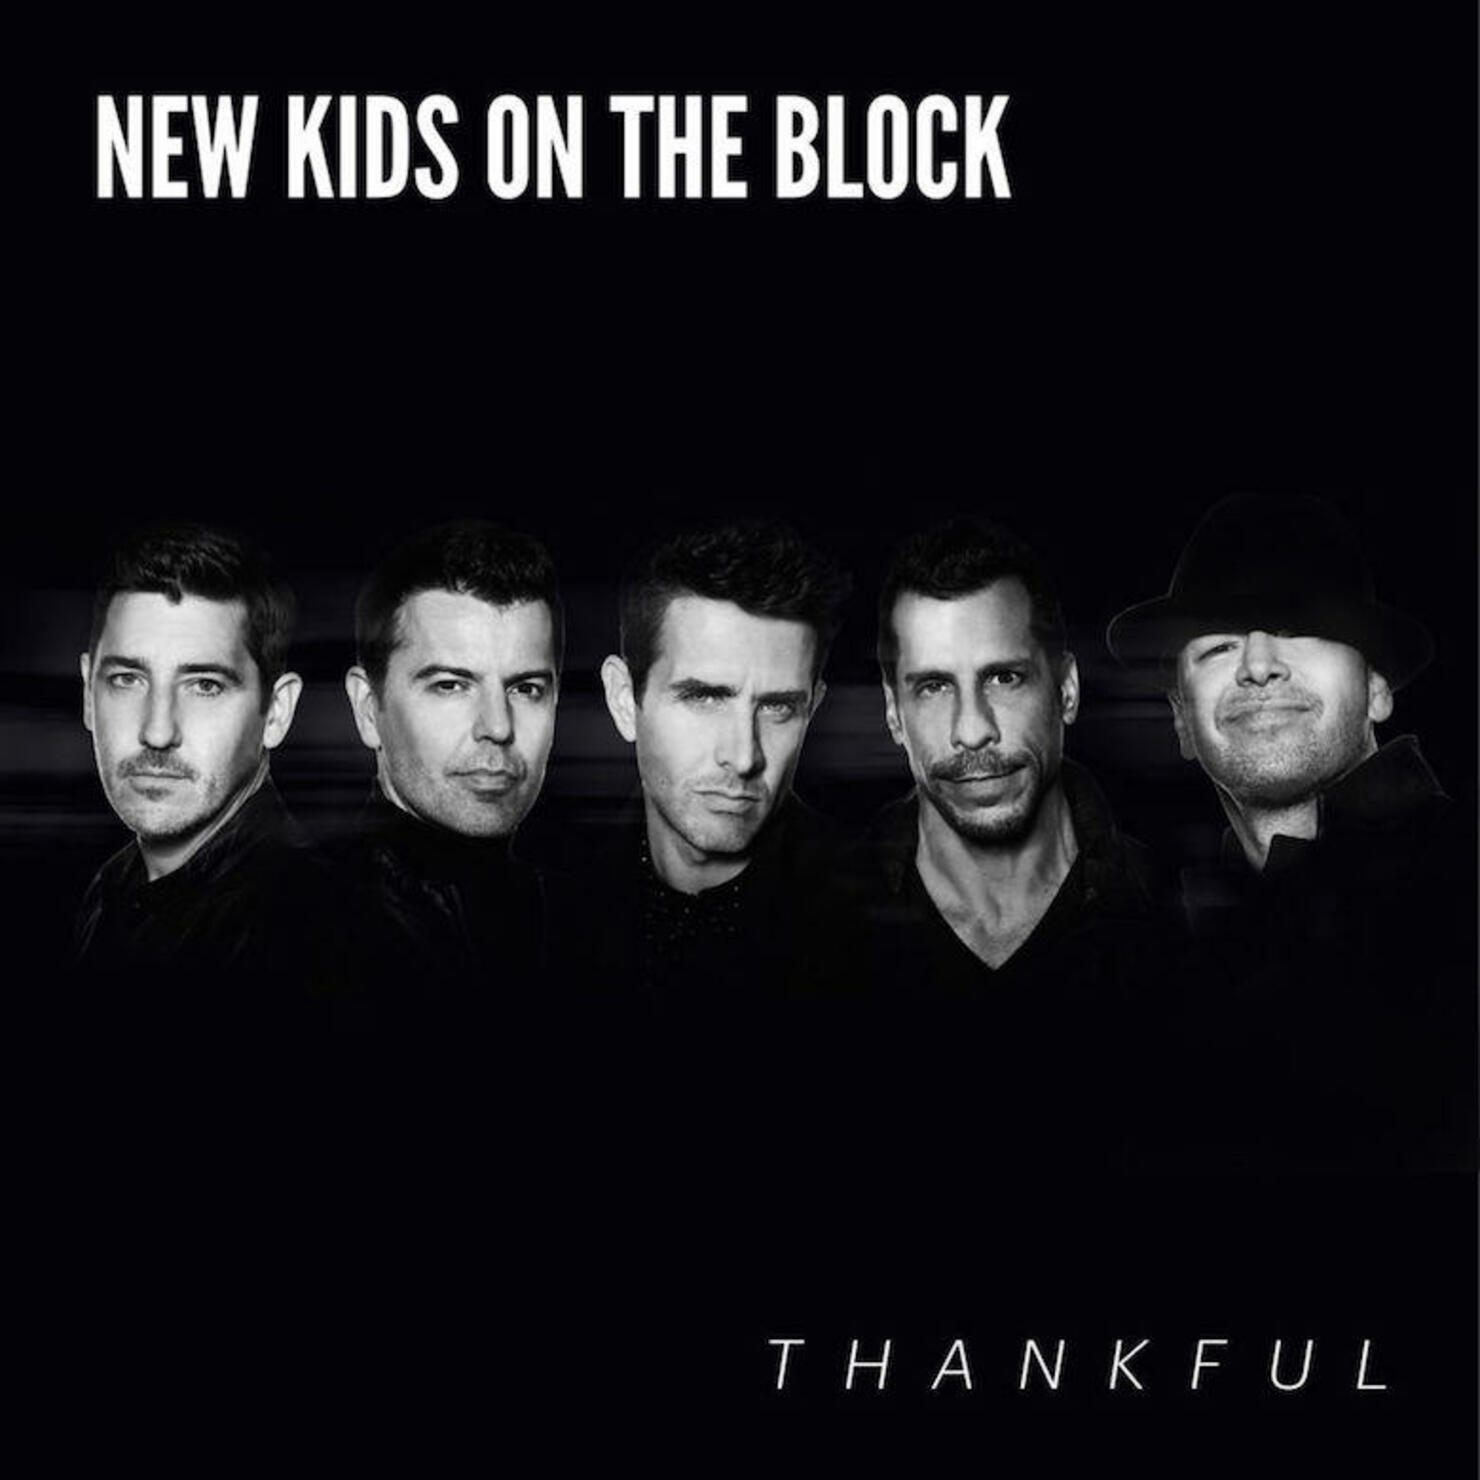 The Backstreet Boys–New Kids On the Block Single Is Here!